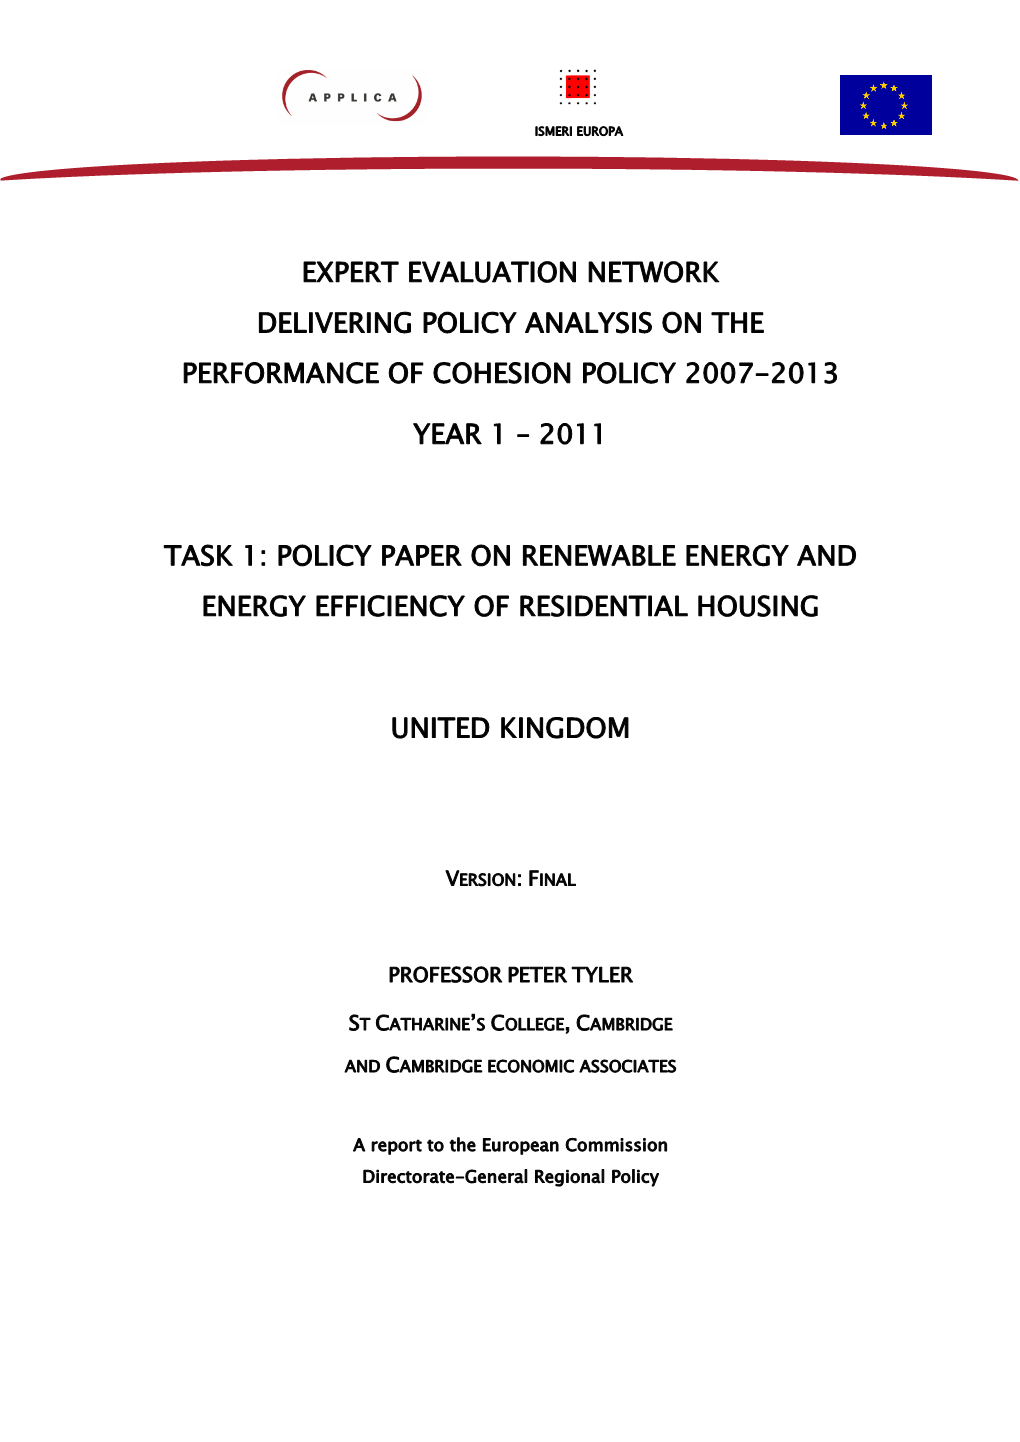 Policy Paper: United Kingdom